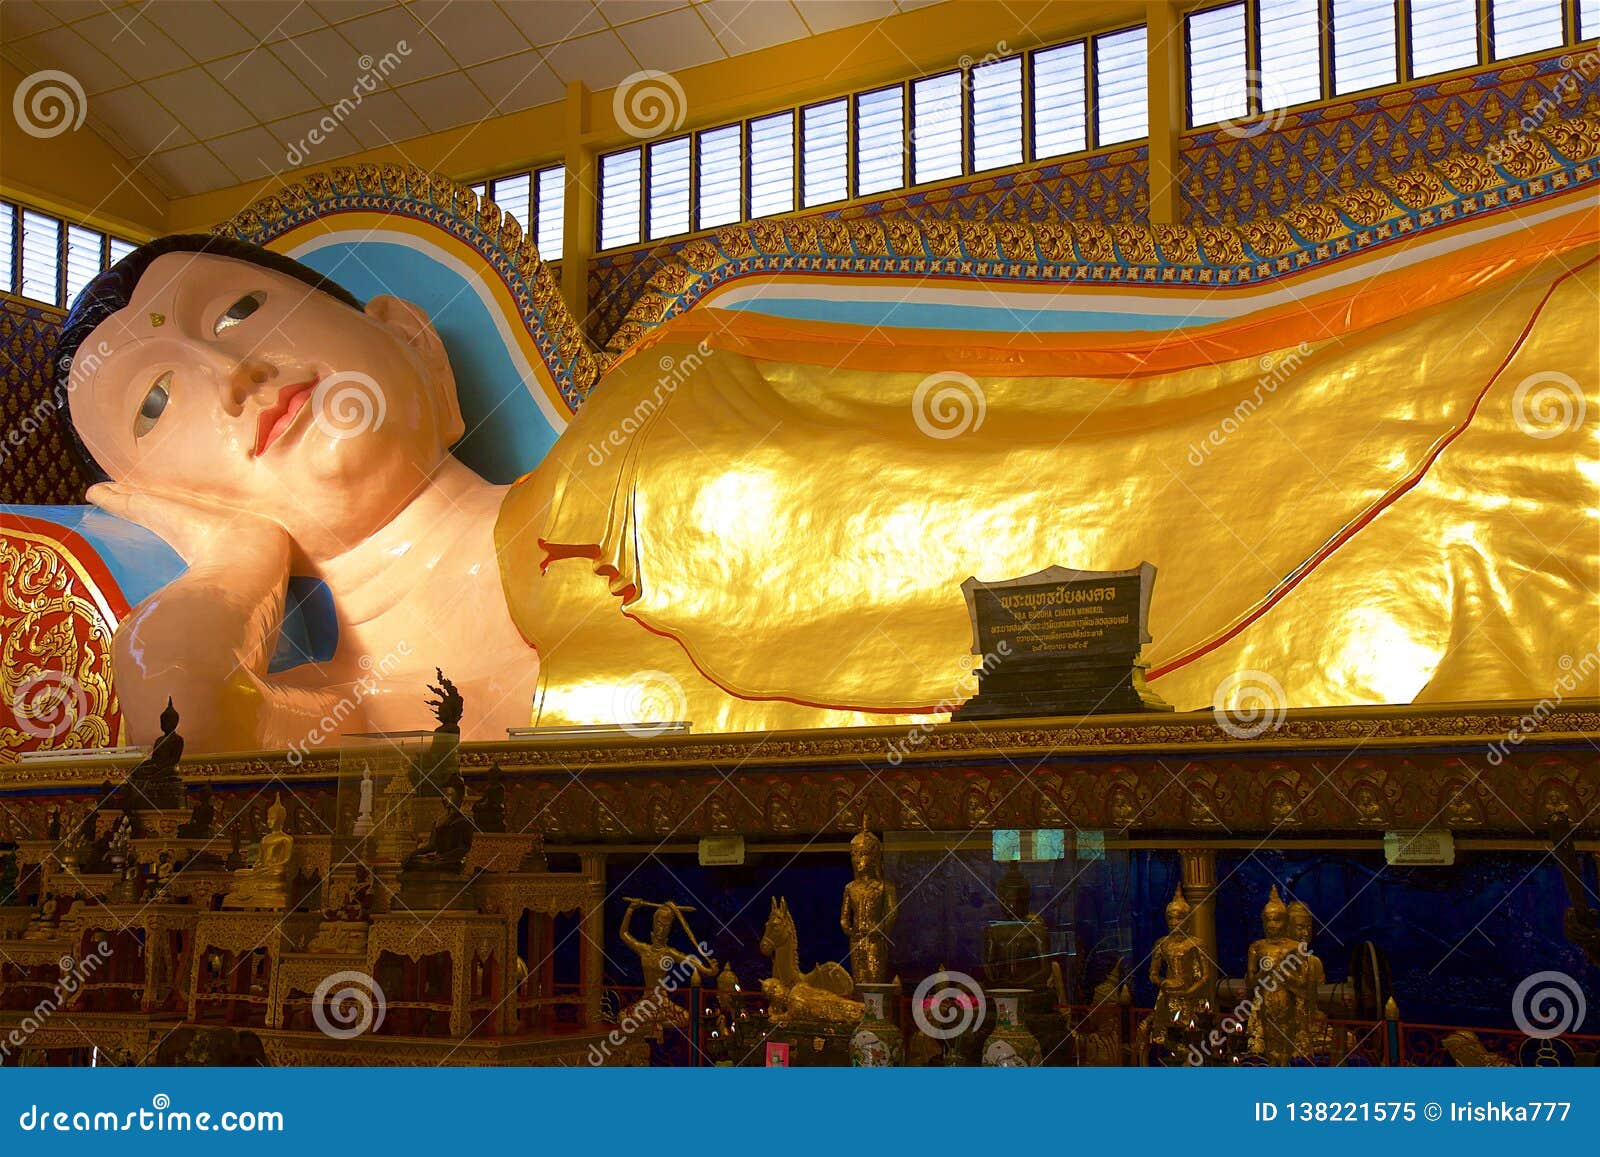 Sleeping buddha penang